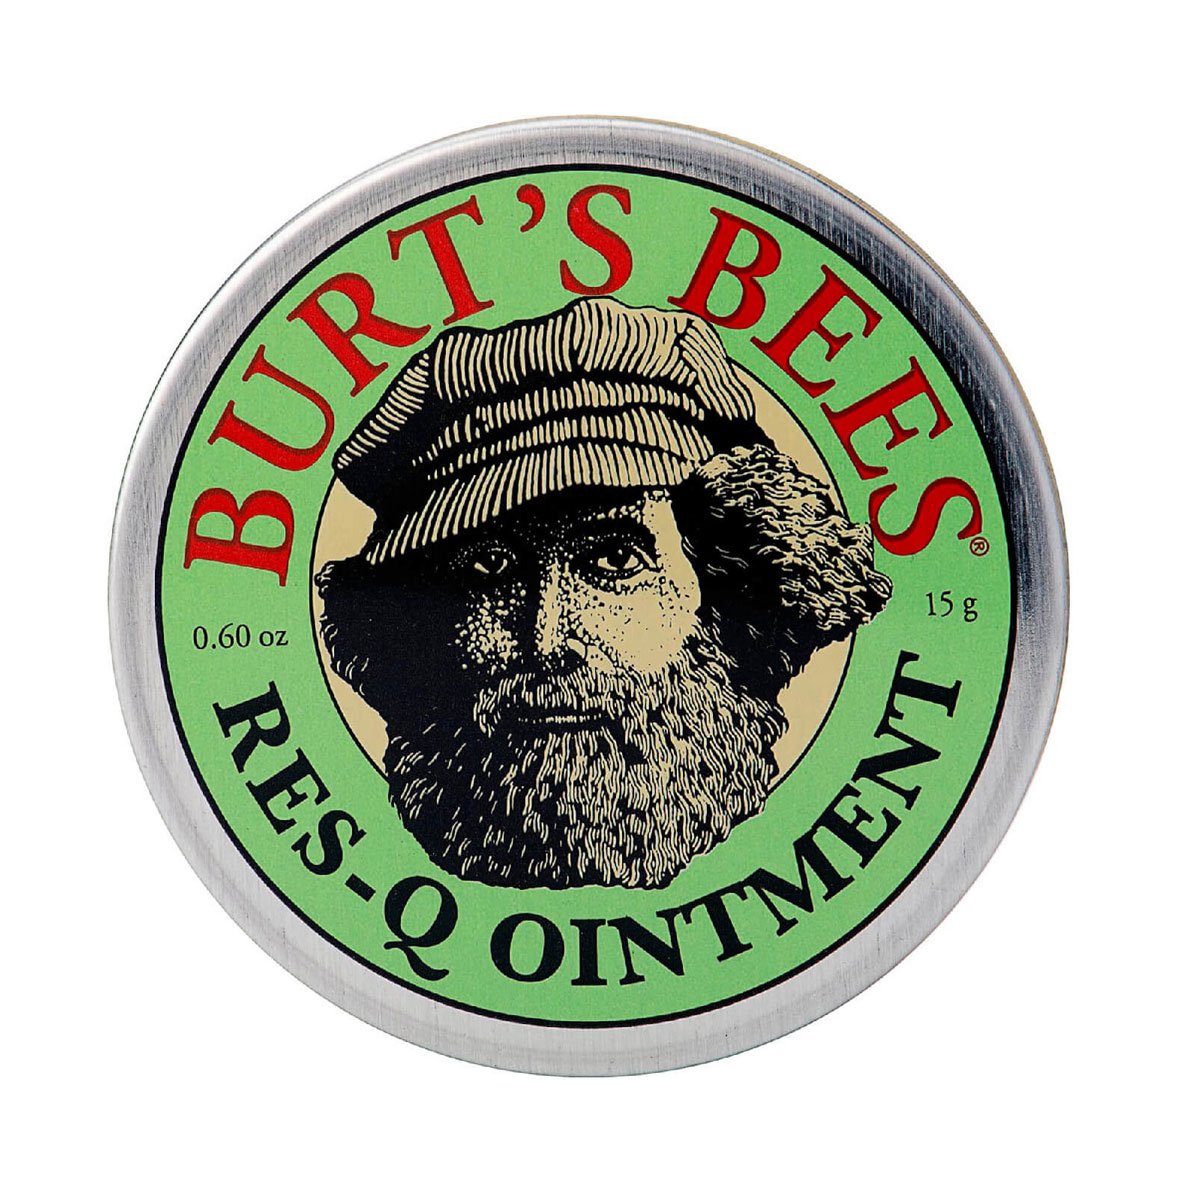 Burt's Bees Res Q Ointment 15g (0.60 oz)